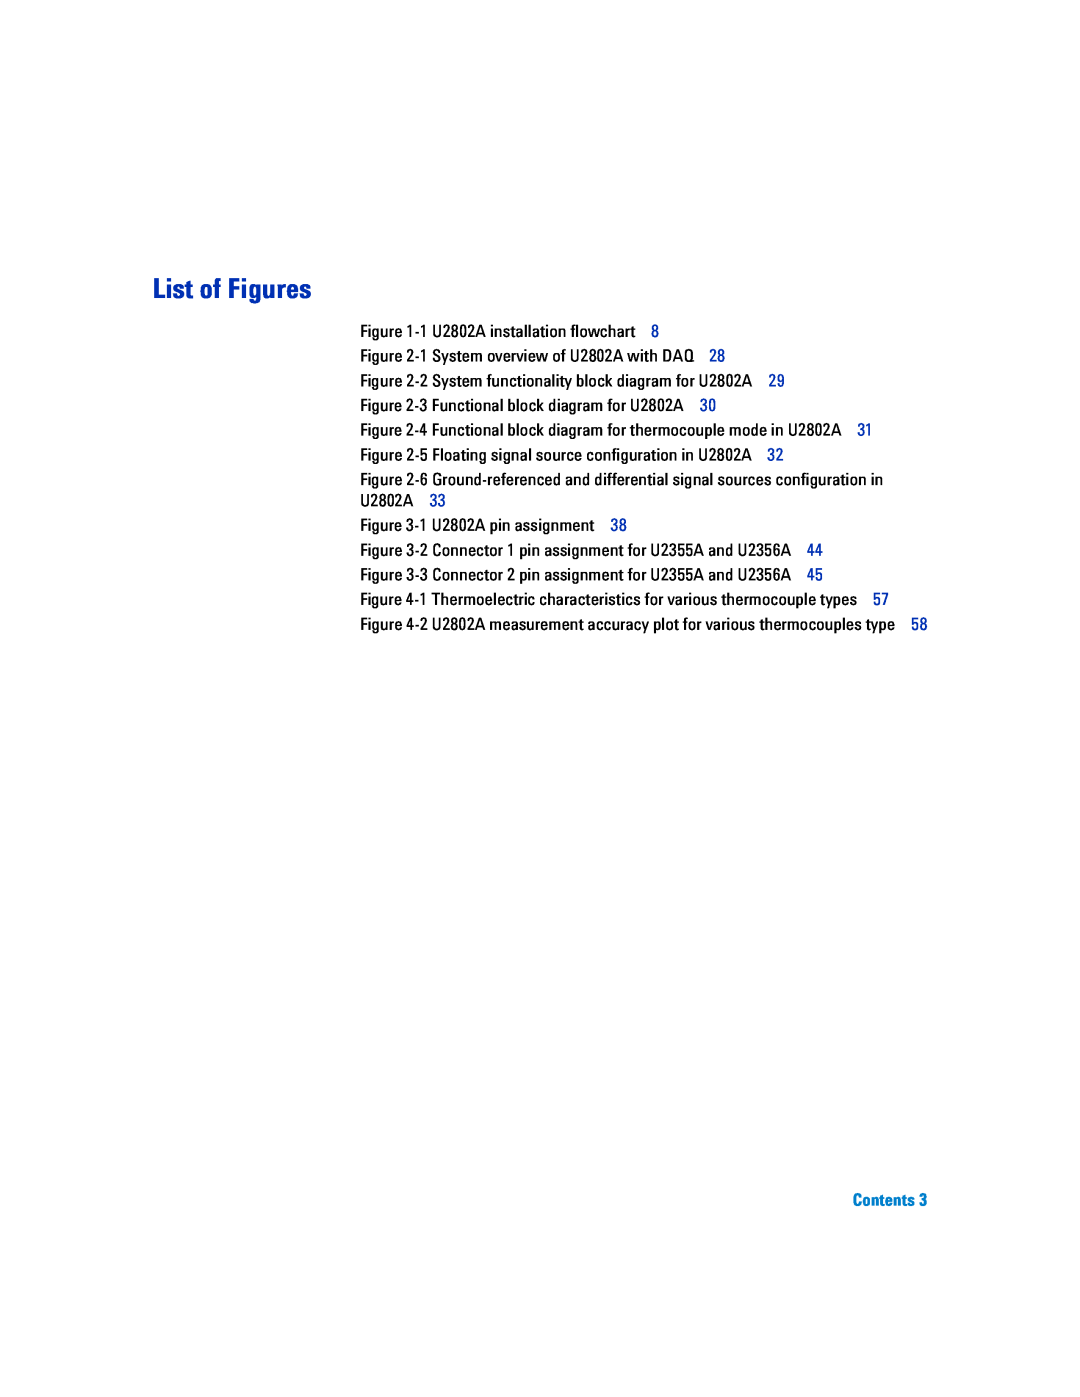 Agilent Technologies U2802A manual List of Figures, Contents 